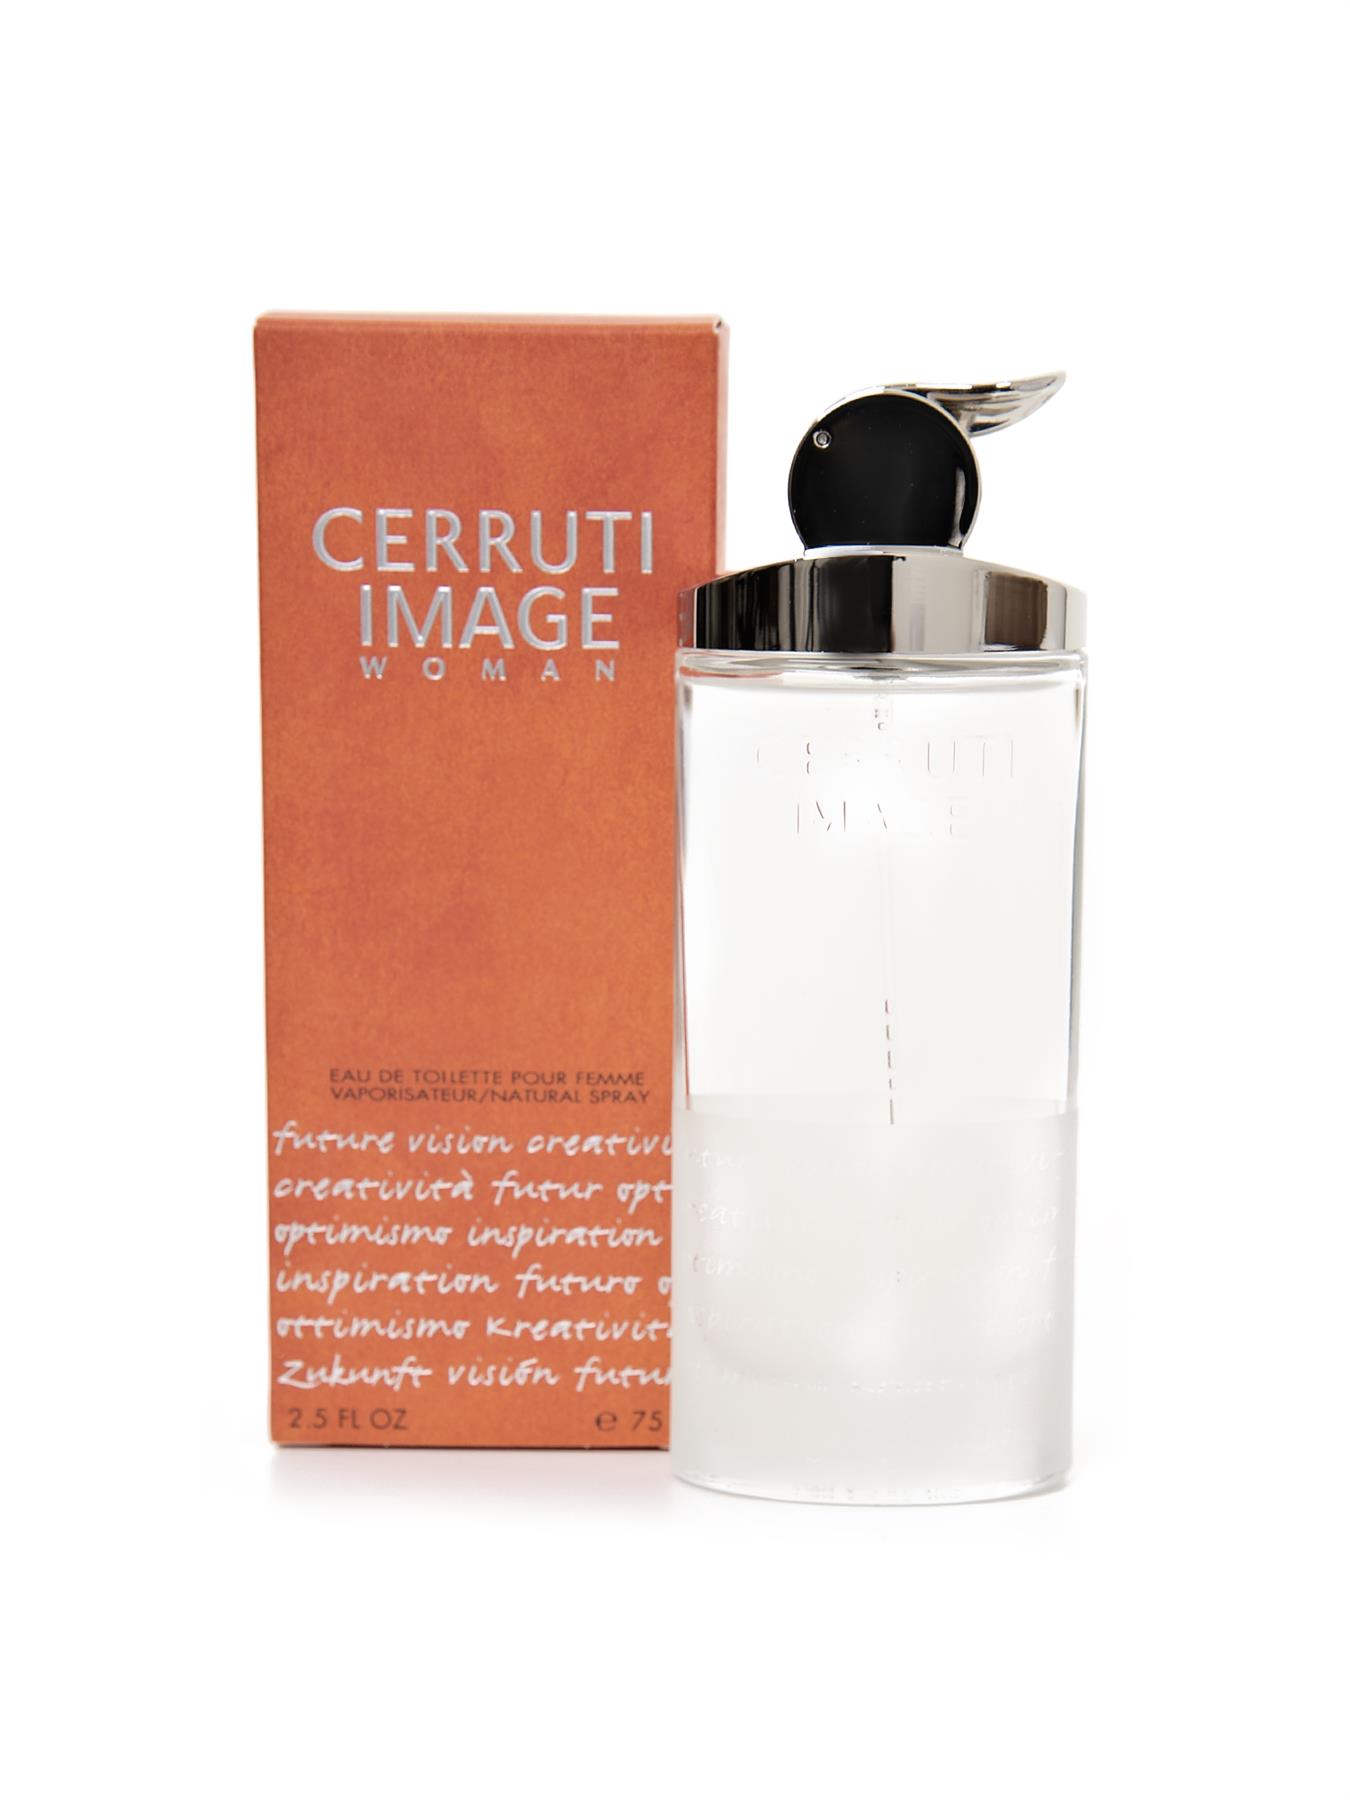 Image Woman - Cerruti - 75 ml - edt